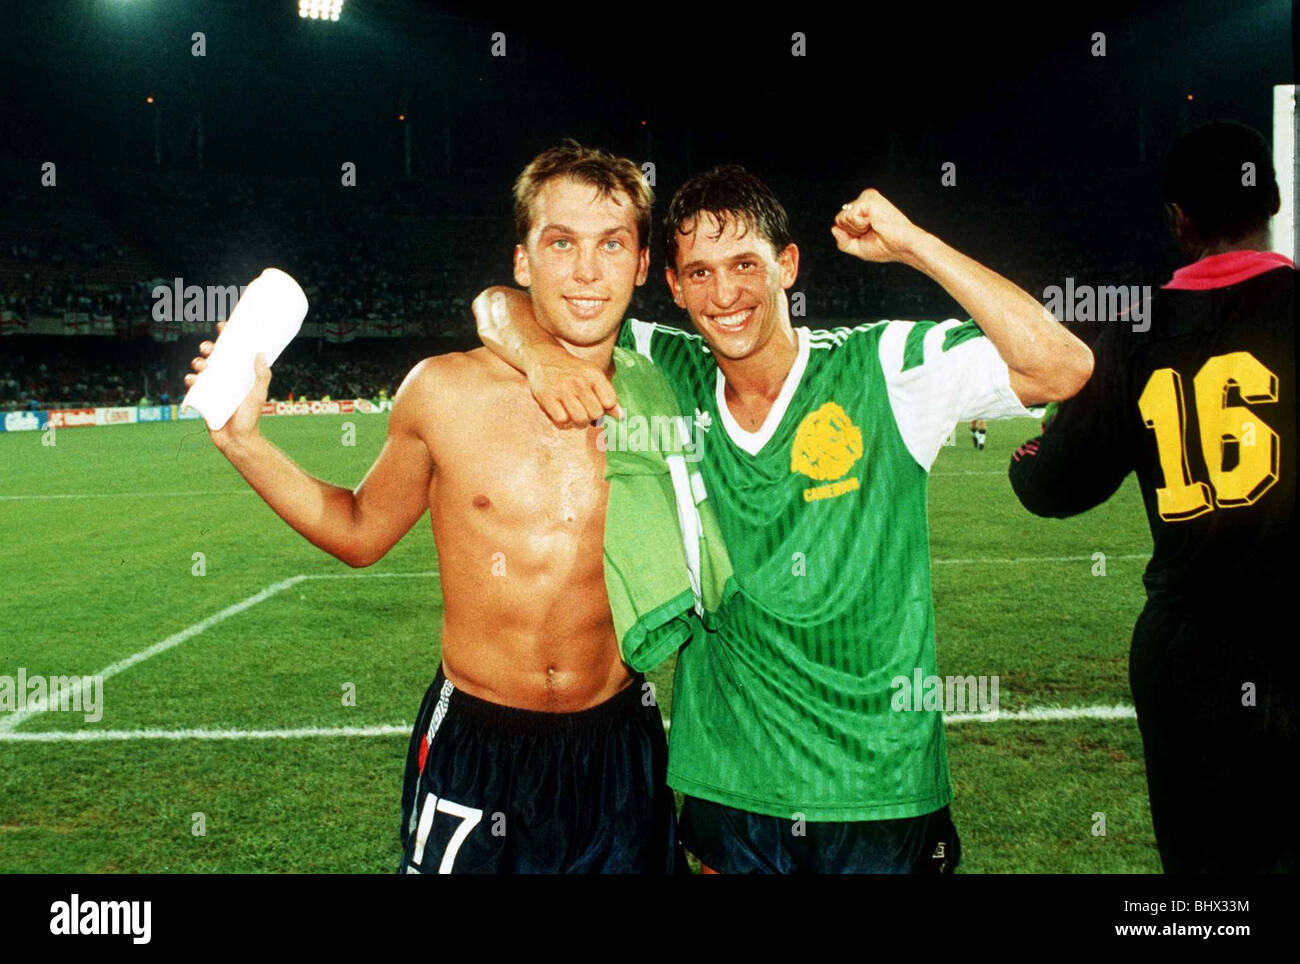 World cup 1990 fotografías e imágenes de alta resolución - Alamy